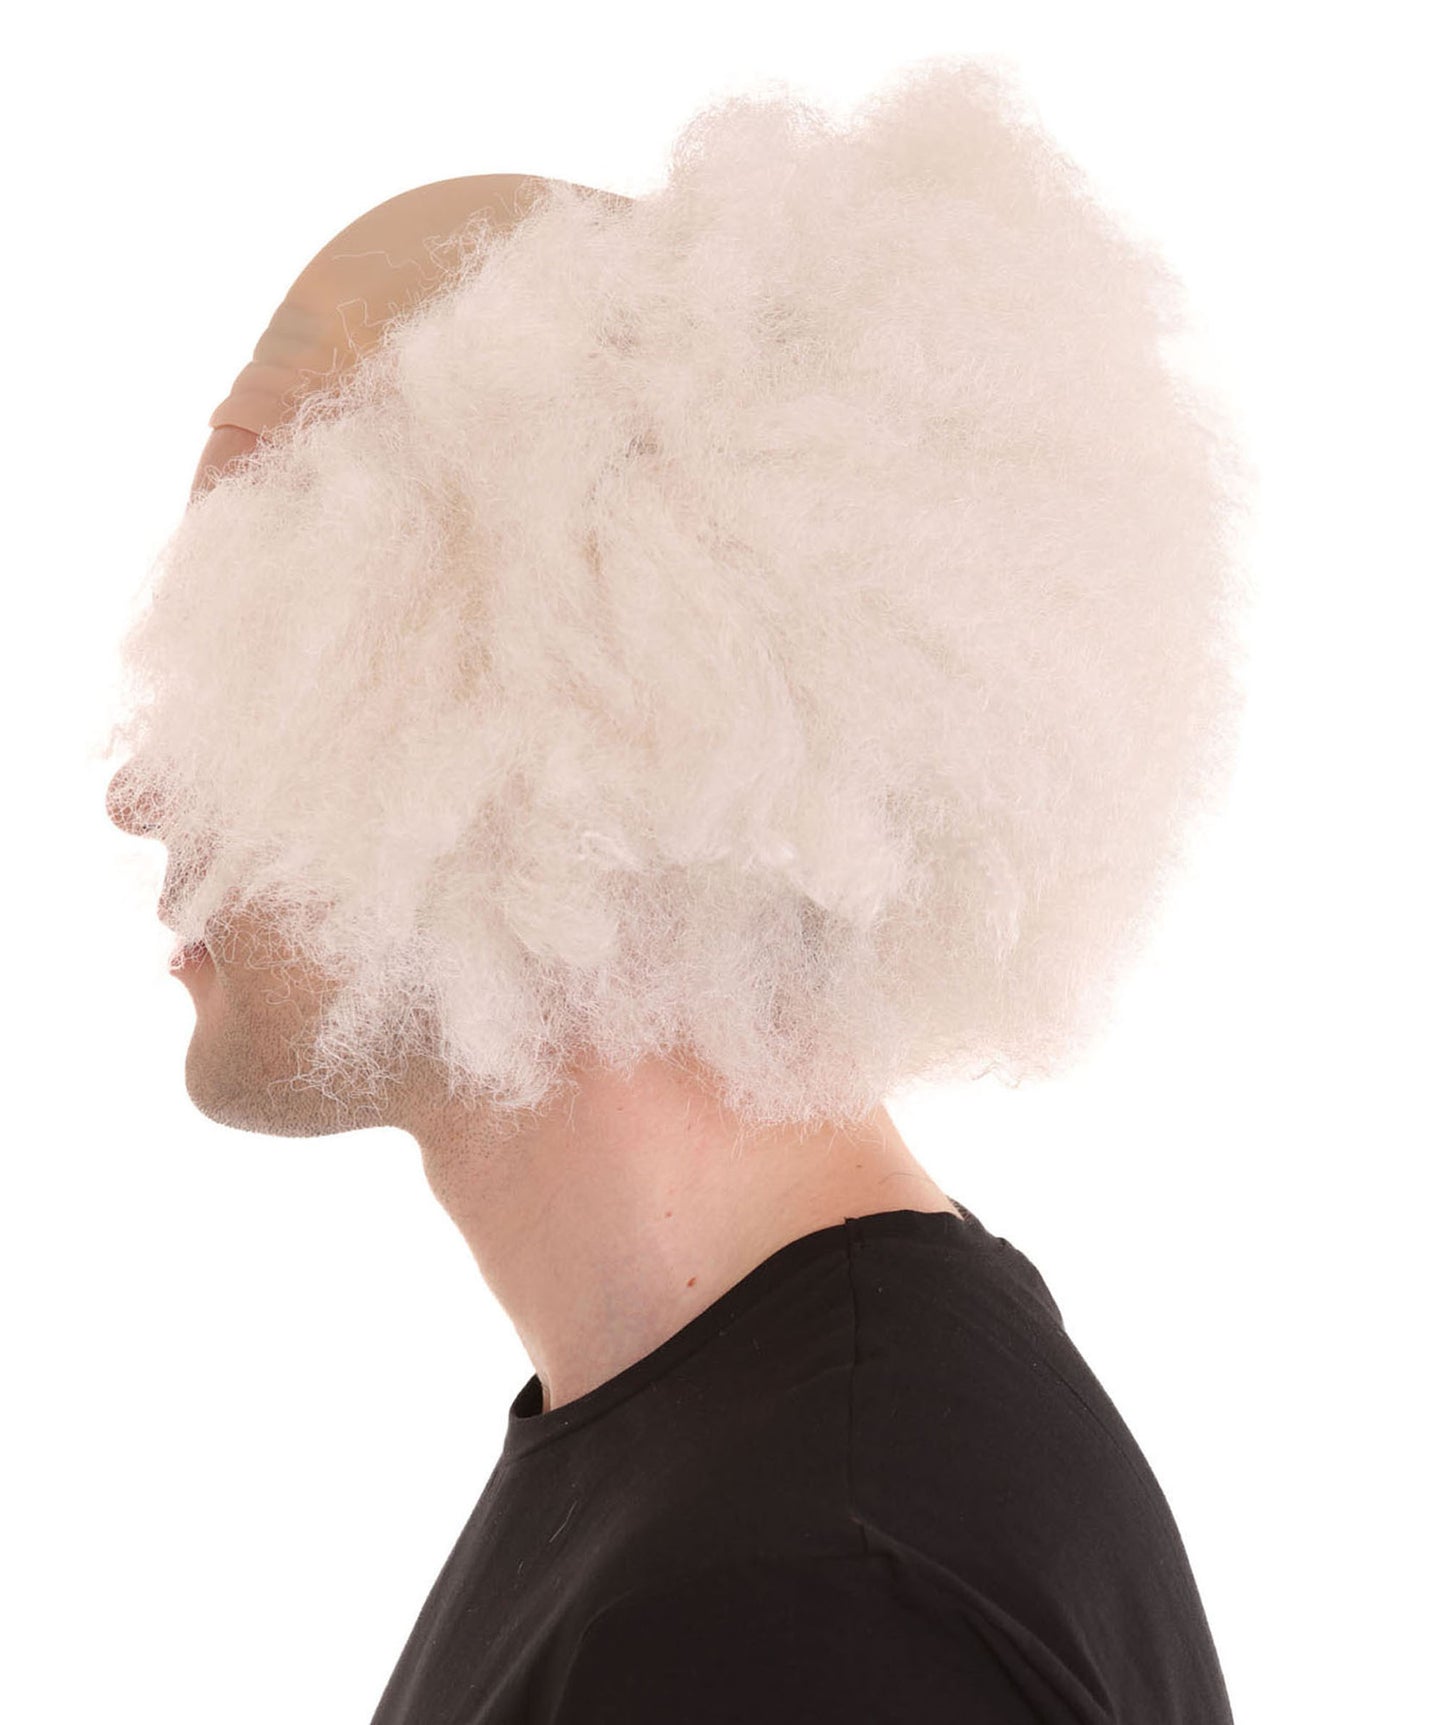 Bald old men Style Wig | Bald Cap White Wig